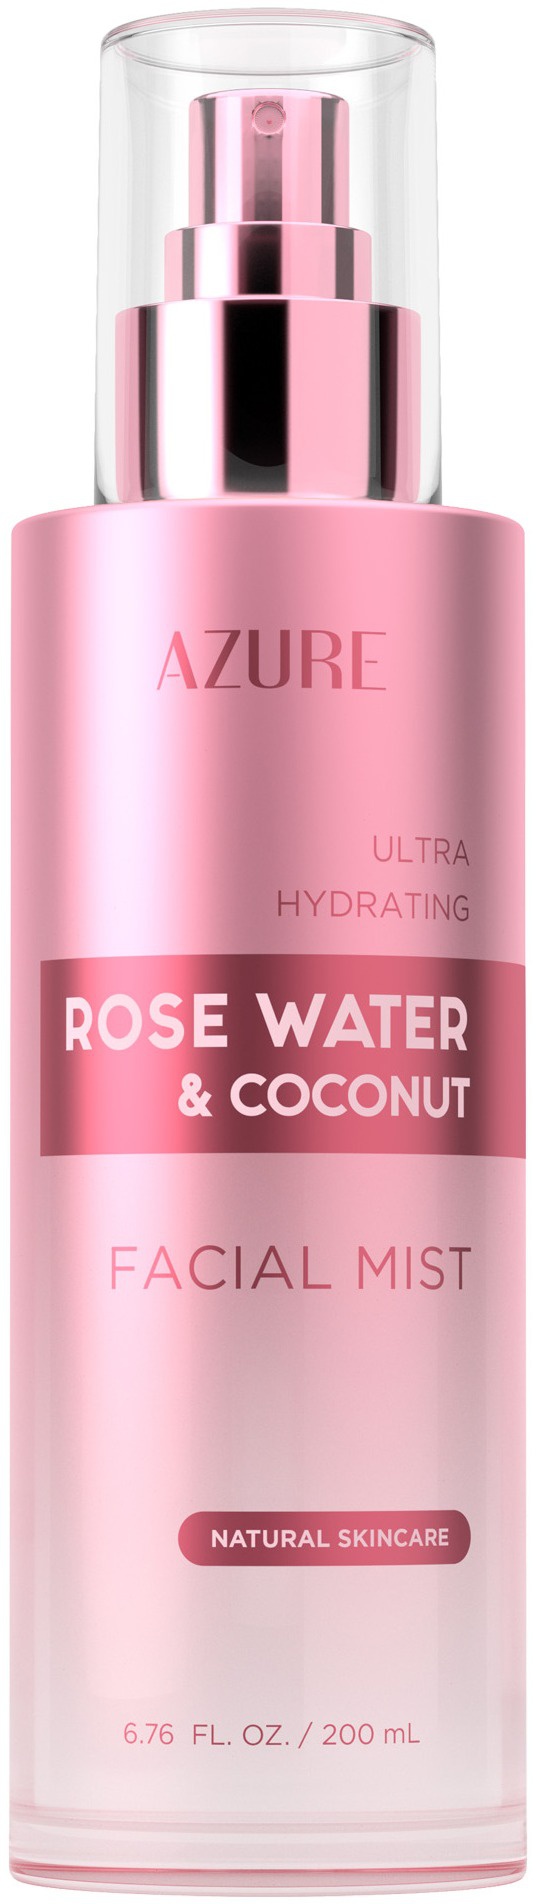 Azure Rose Water & Coconut